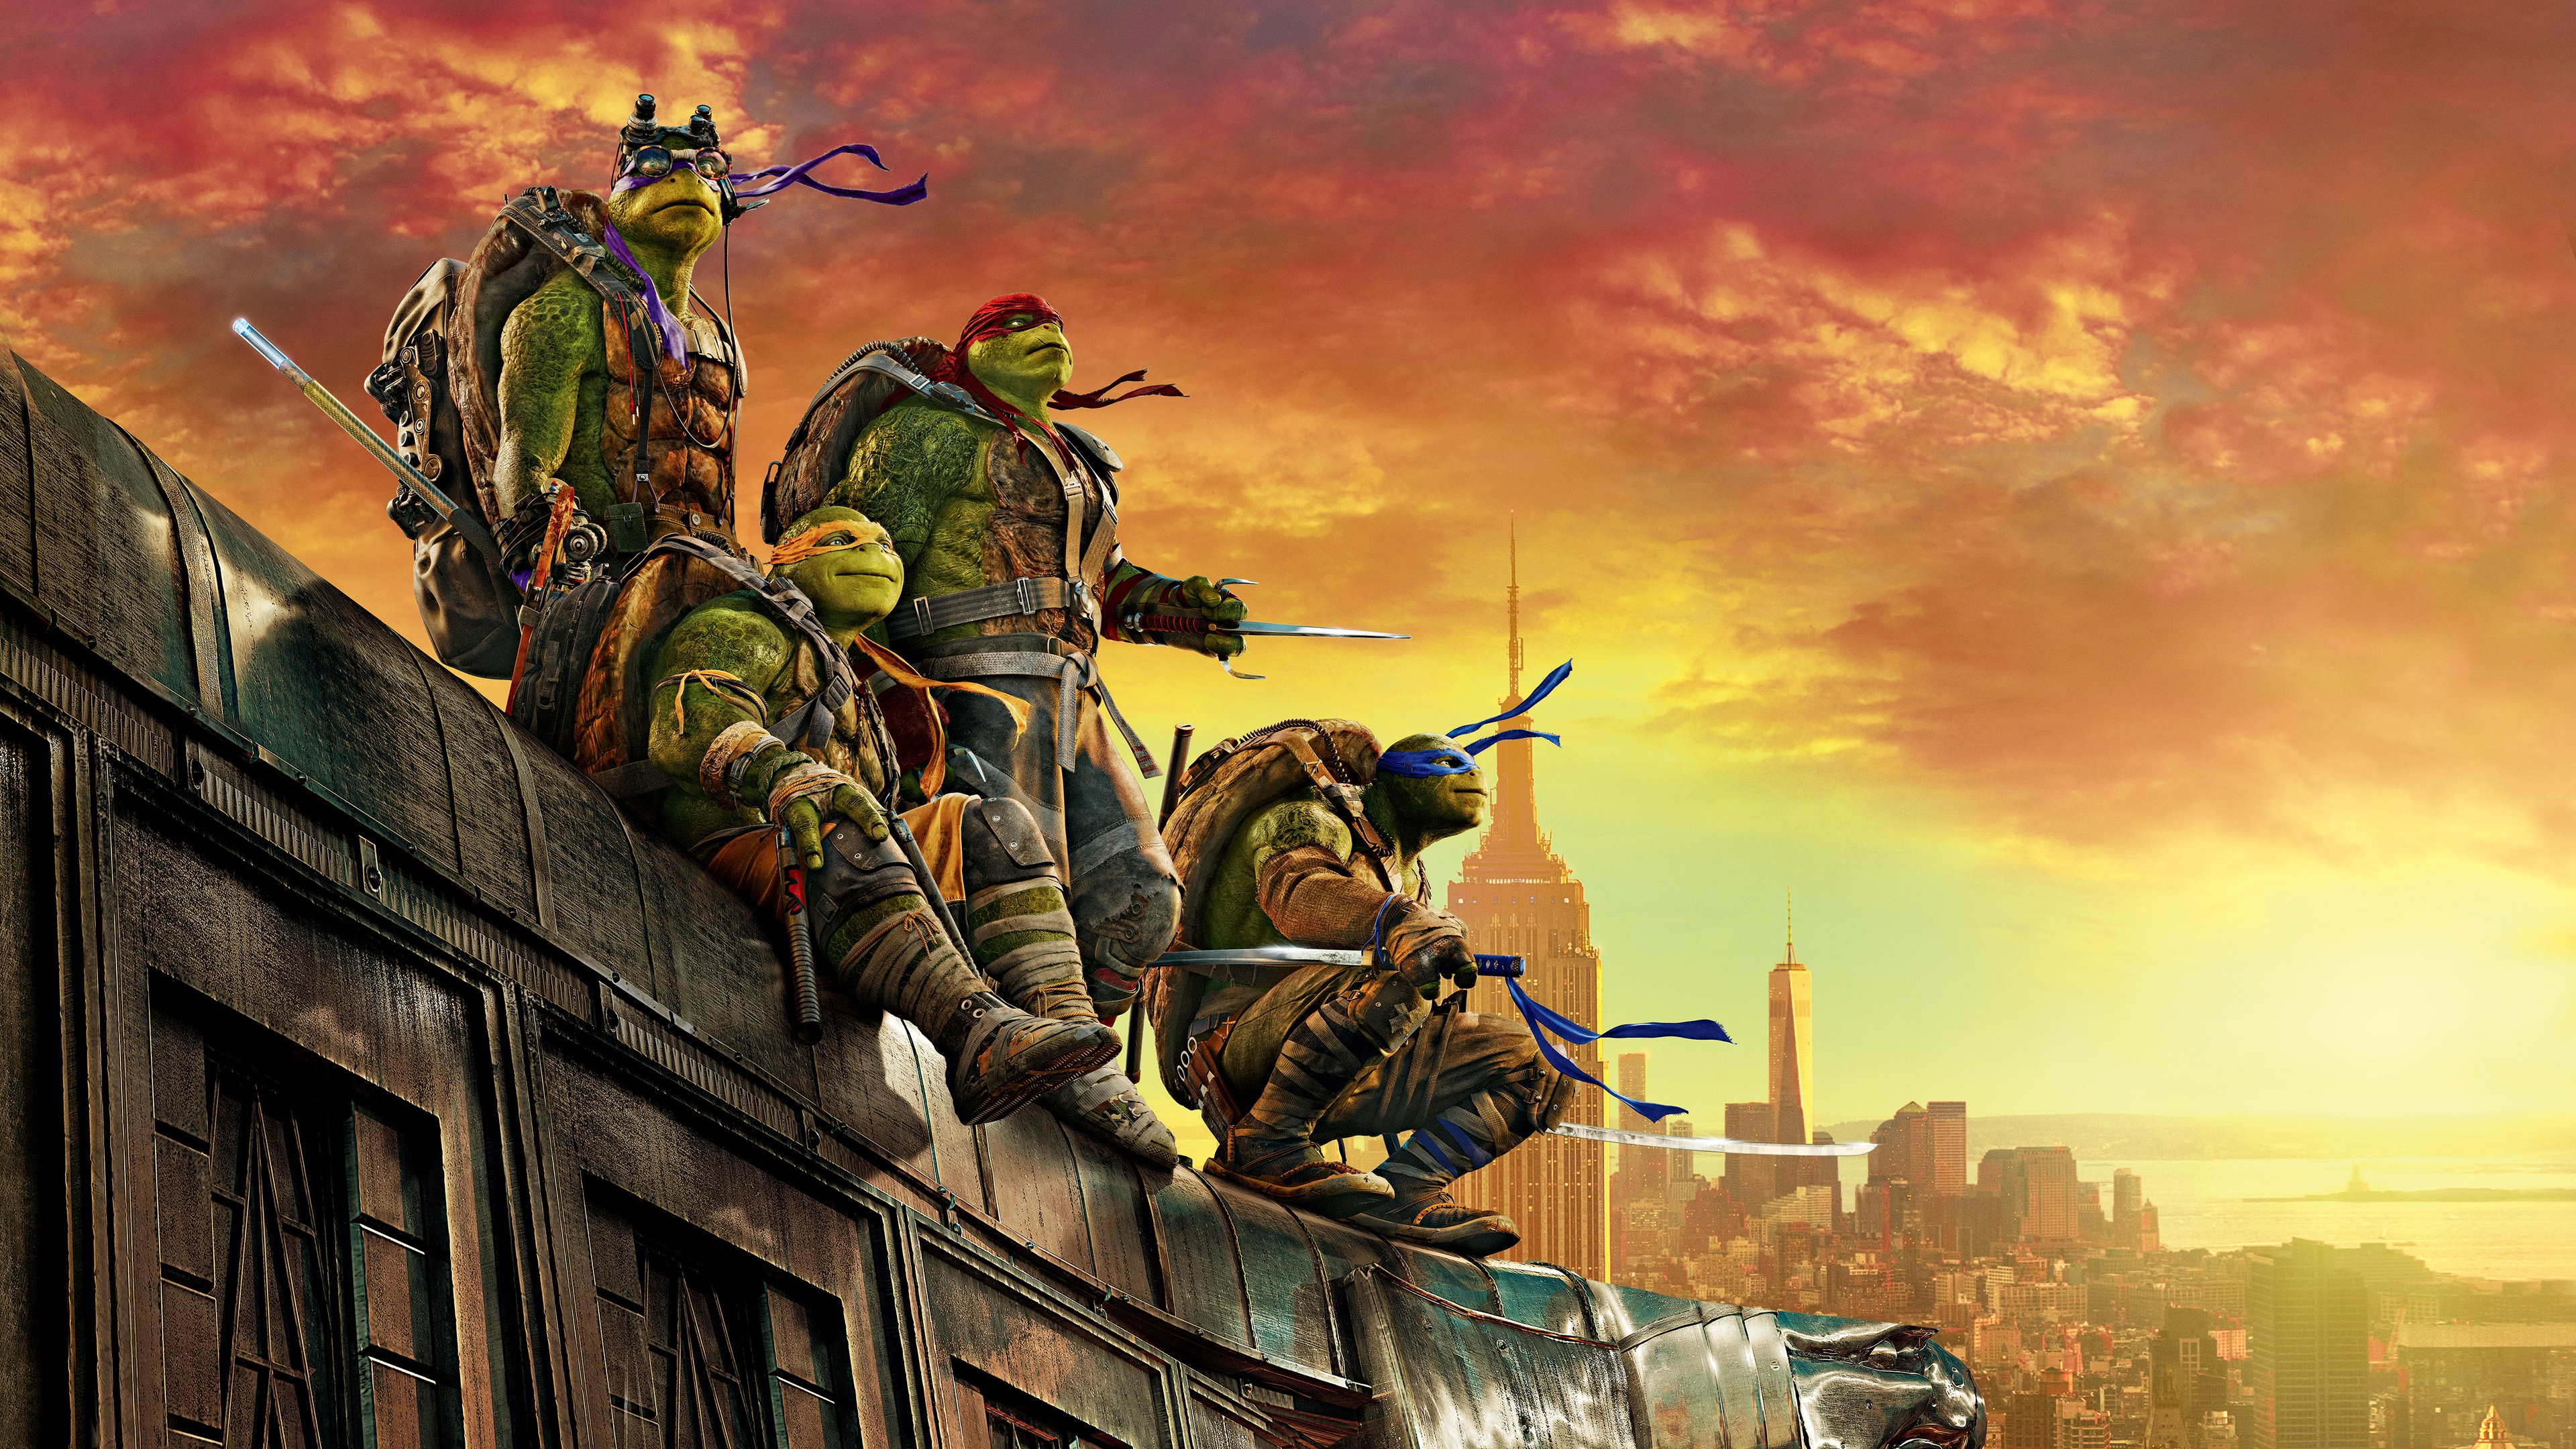 Download This Wallpaper - Ninja Turtles Background , HD Wallpaper & Backgrounds